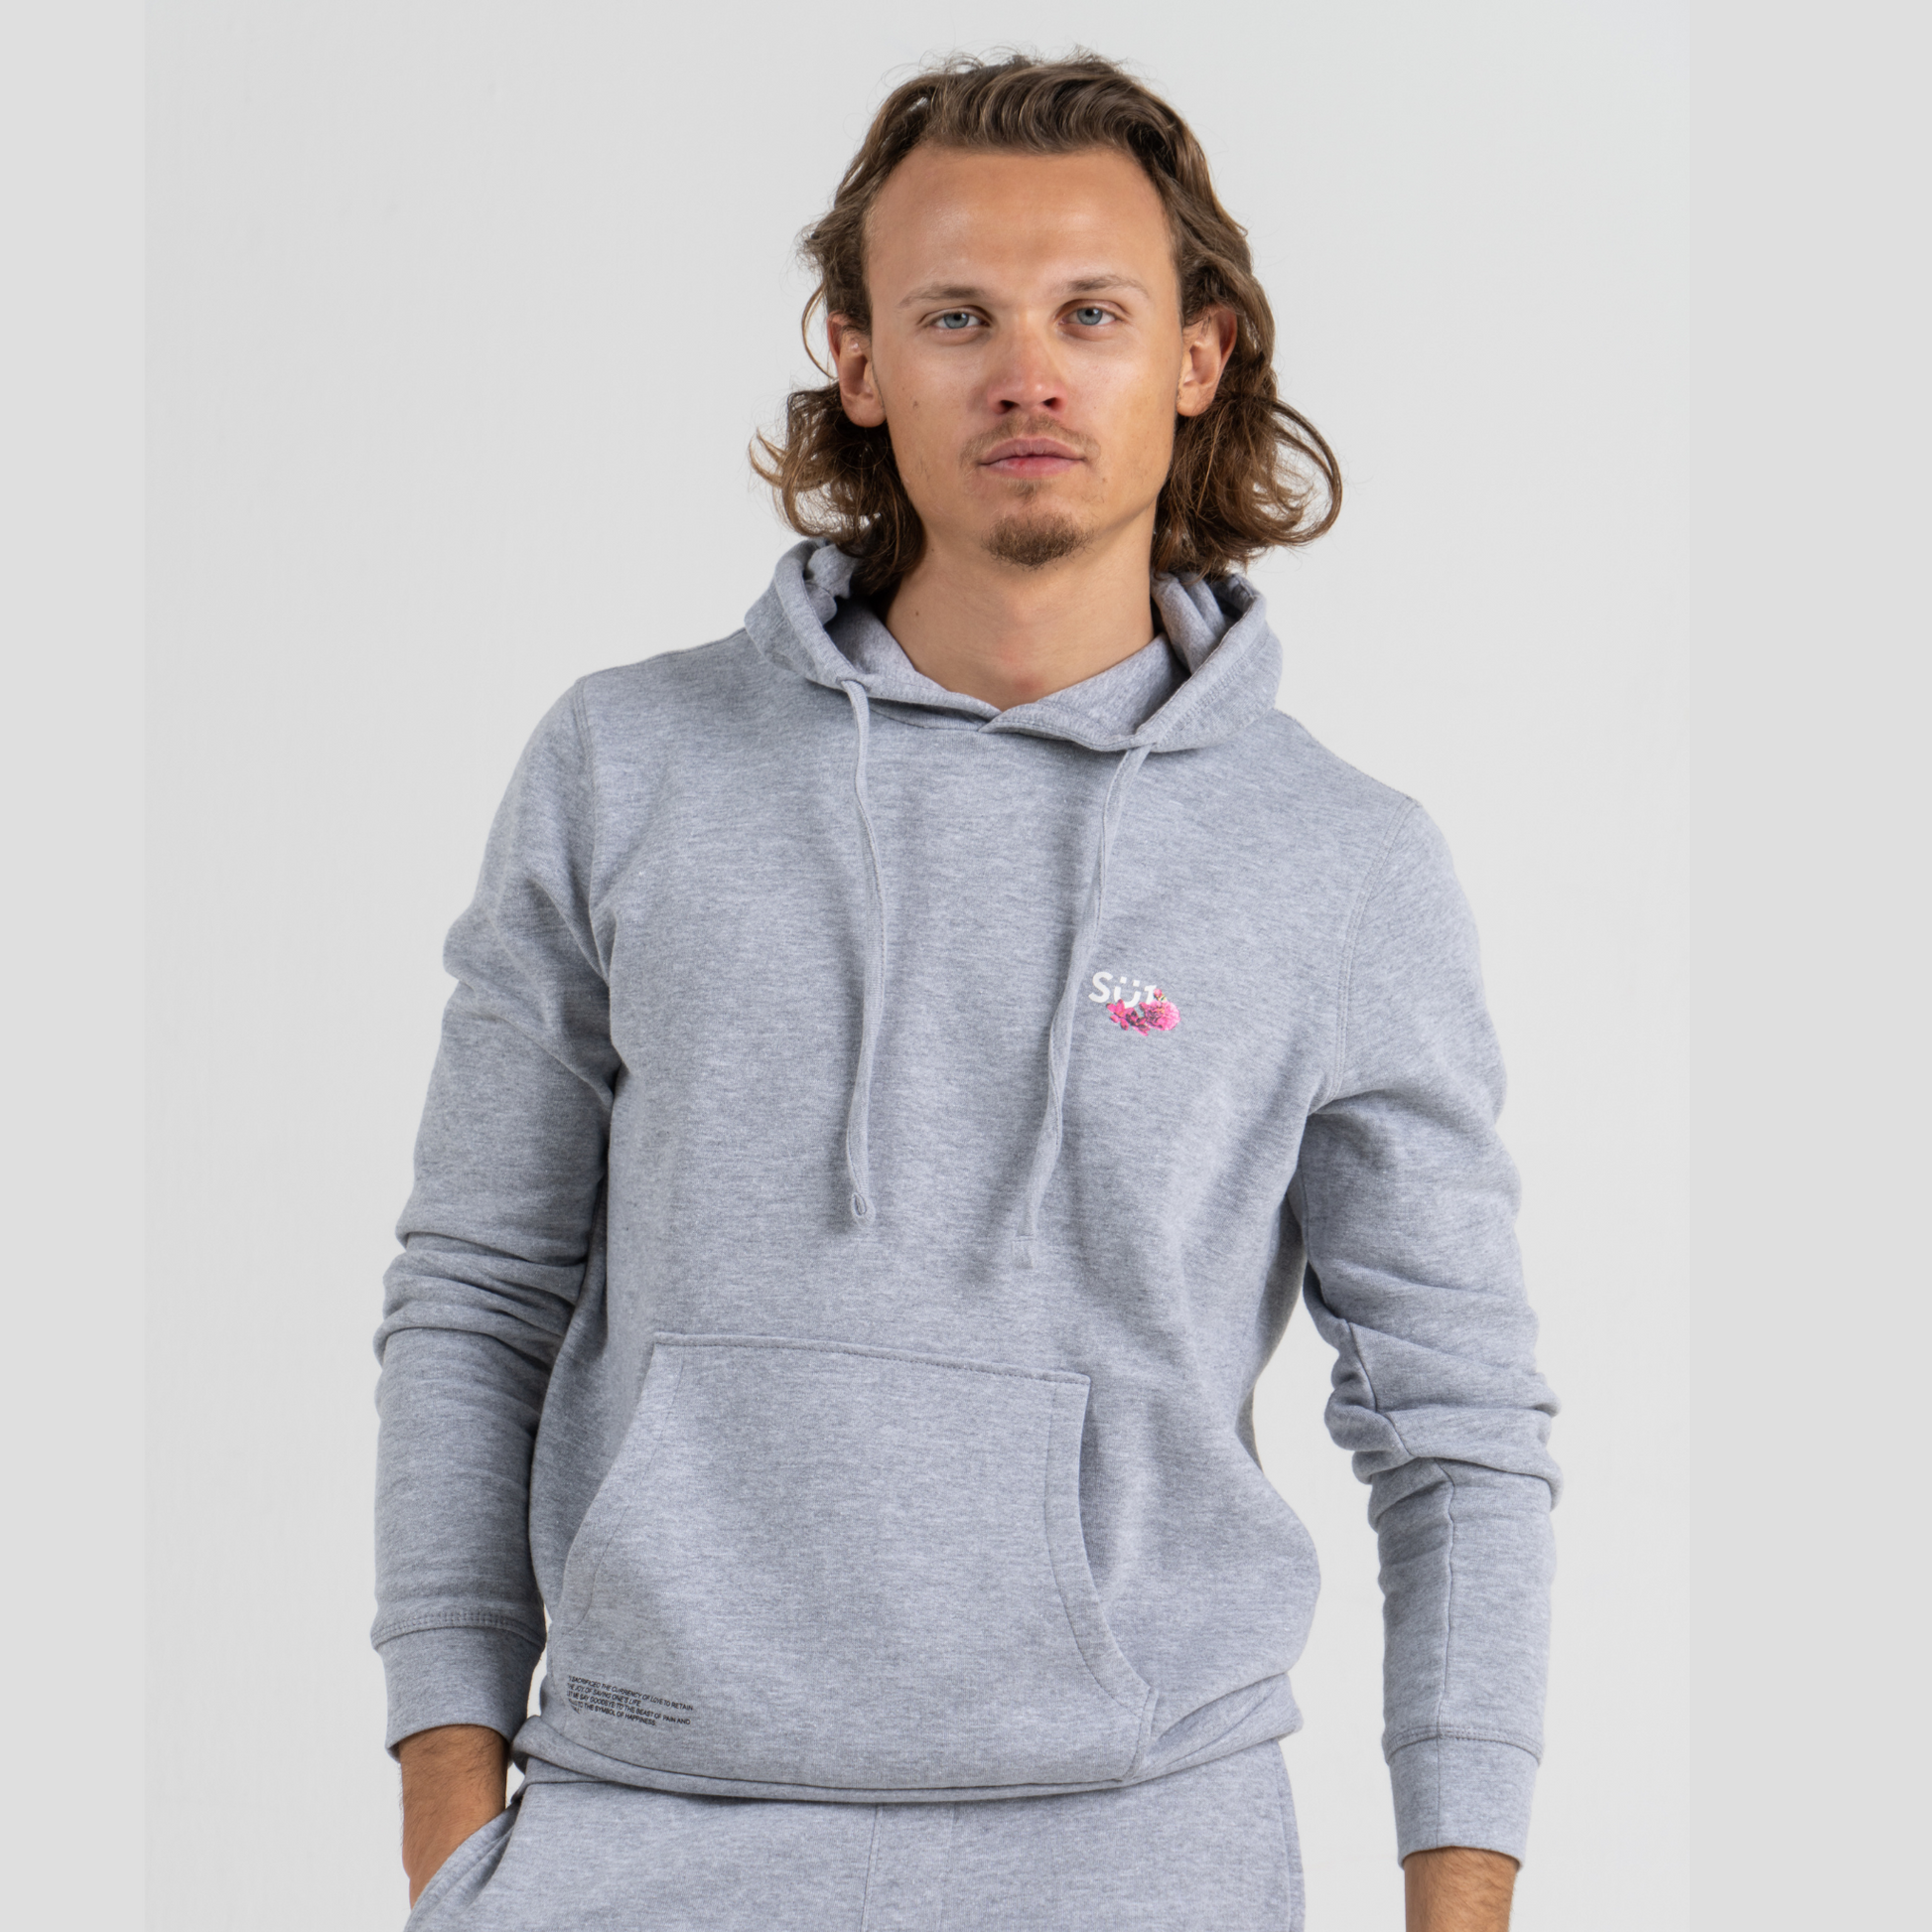 Man wearing grey sweater SU1 clothing brand 